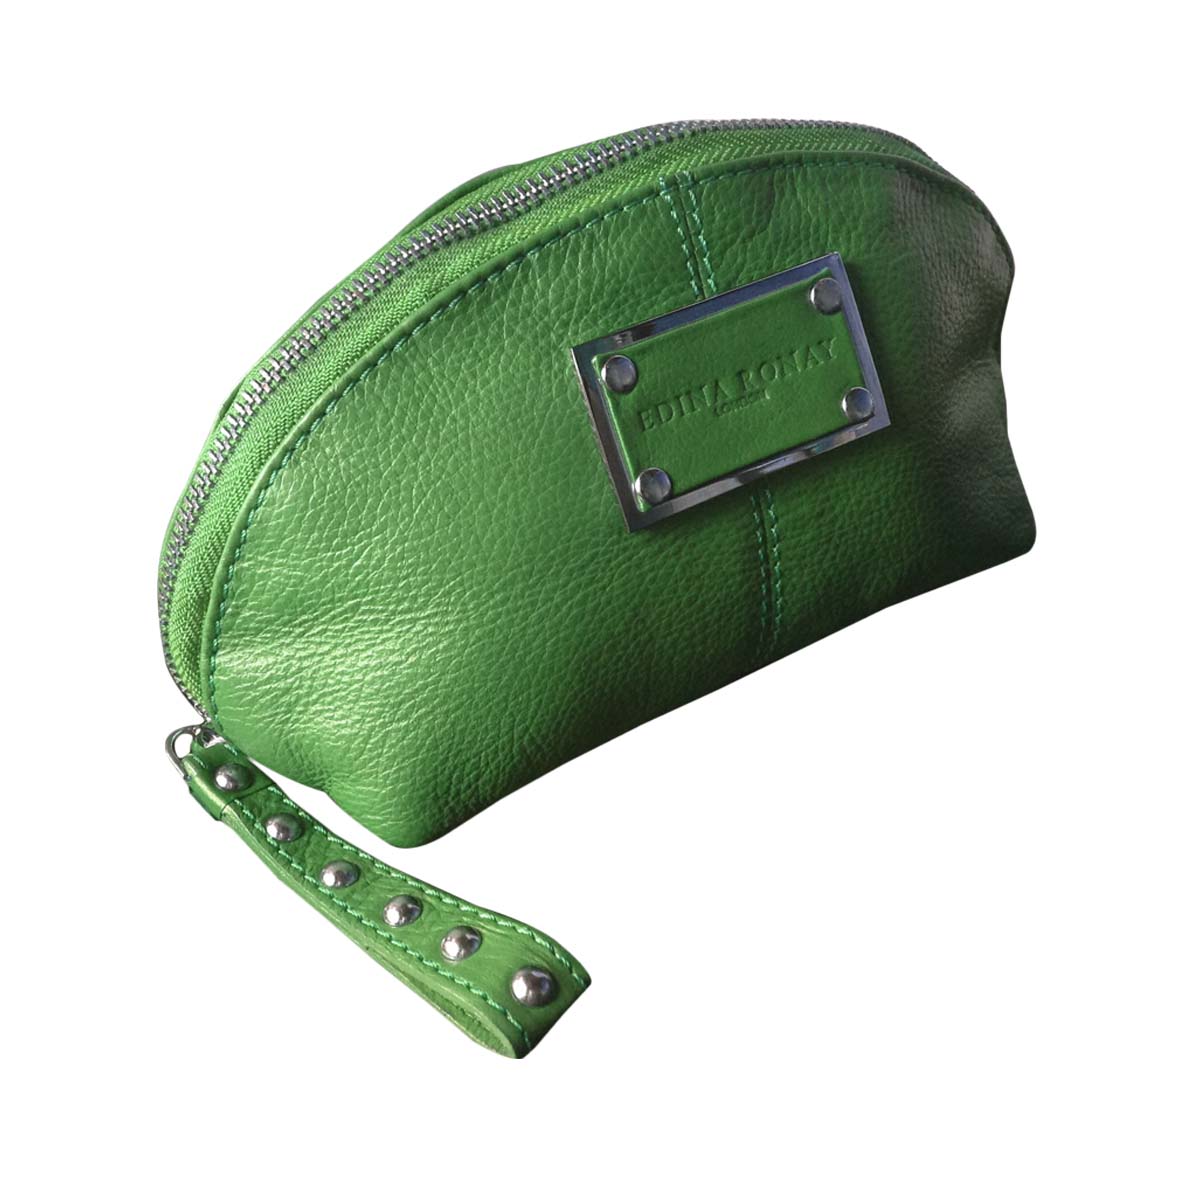 Download EDINA RONAY Pea Green Leather Cosmetic bag - finga-nails